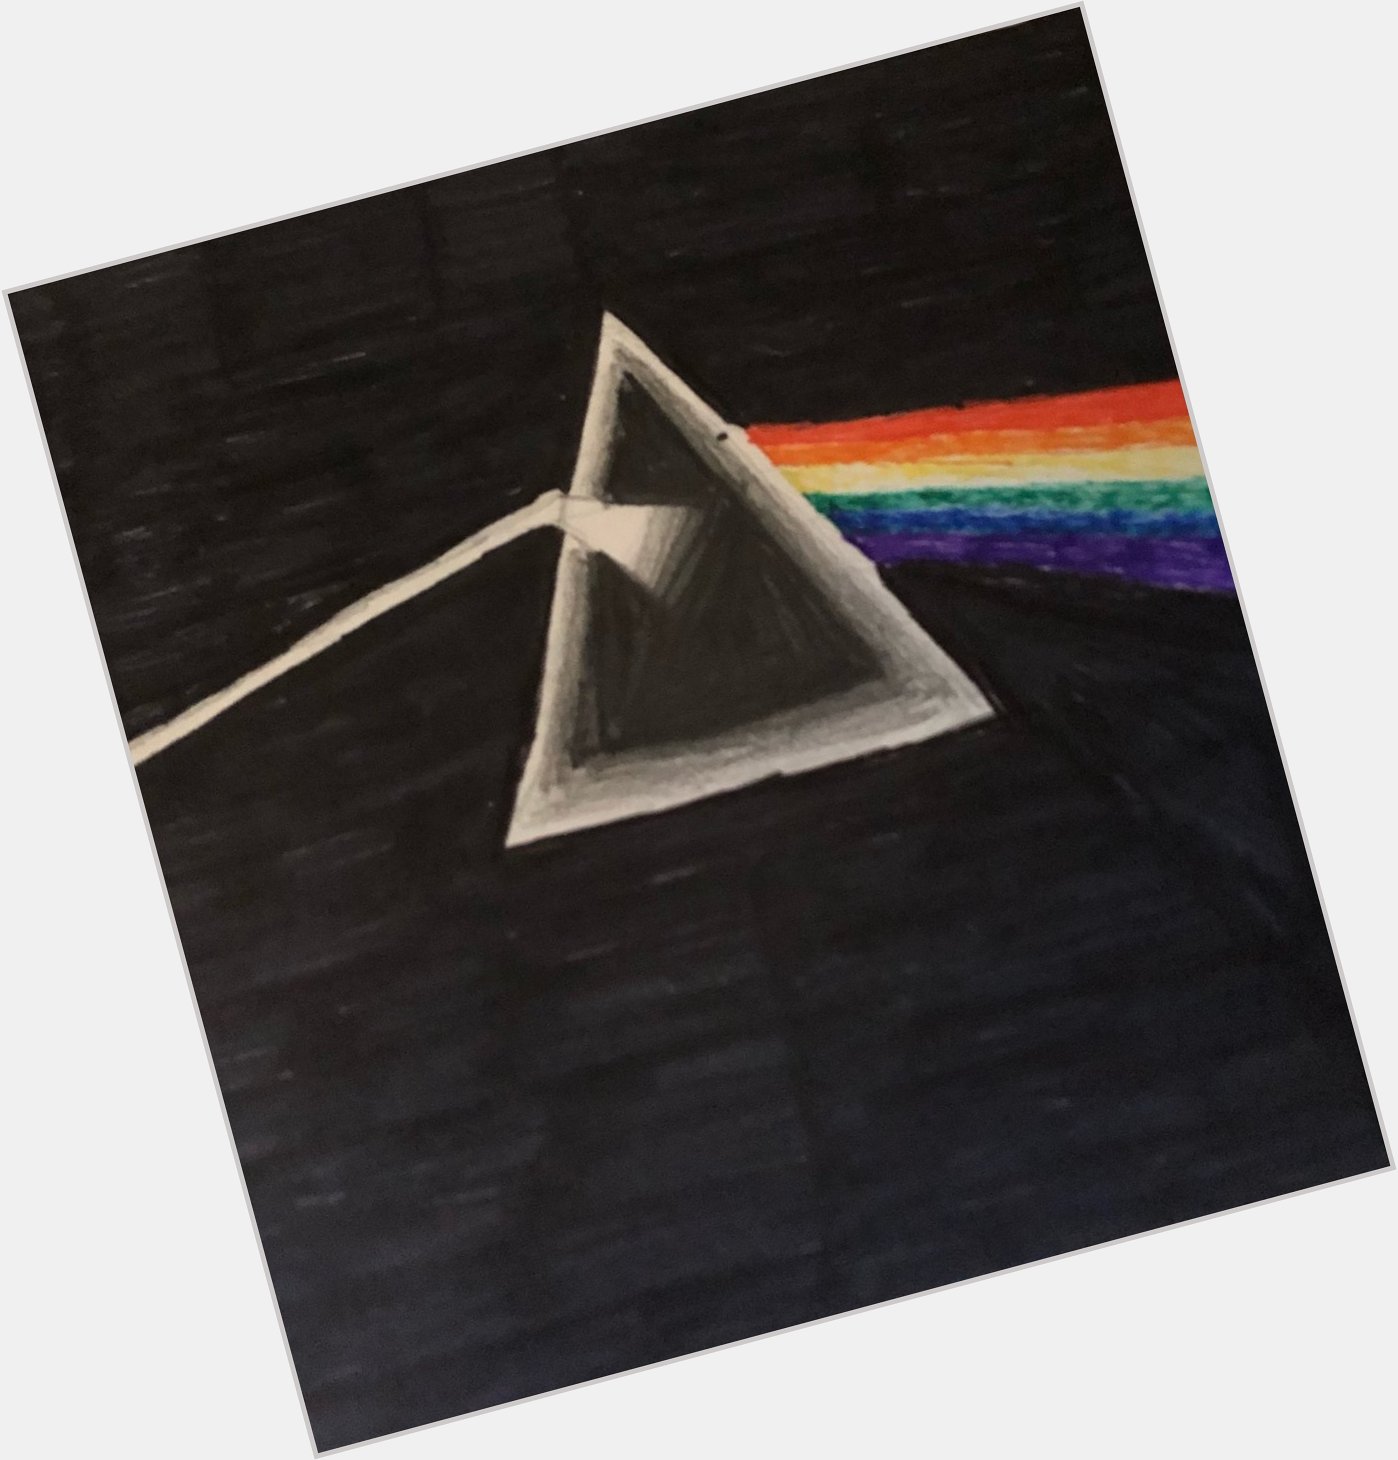 Happy 50th birthday Pink Floyd s Dark Side of the Moon.

[Art by Tatum Bell] 